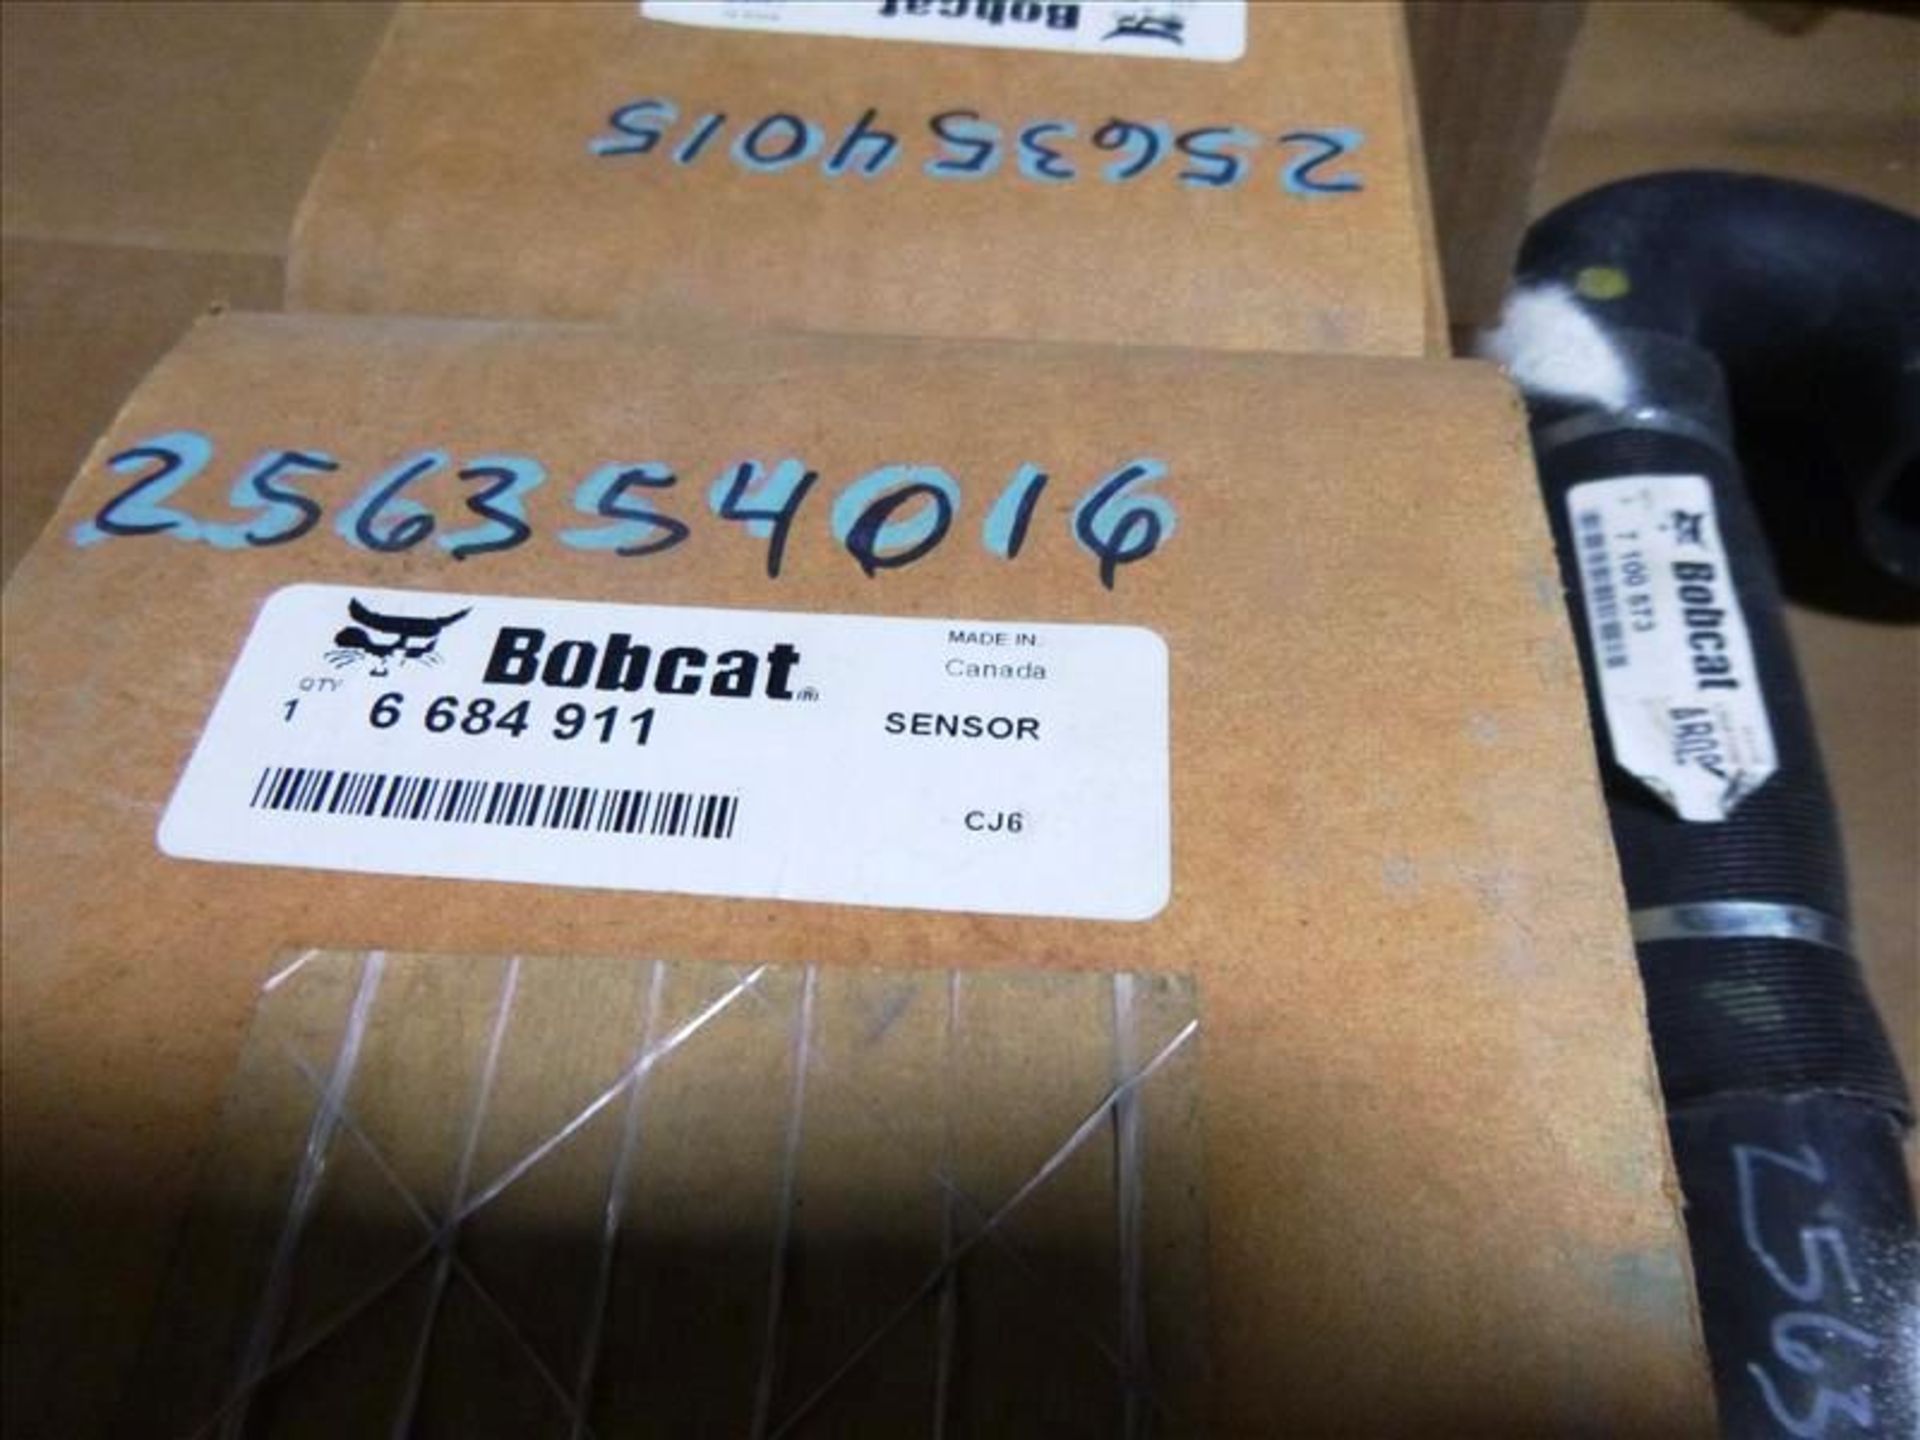 misc. Bobcat spare parts (CRT 5), incl.: Panel Filters p/n 6 677 983, Sensors p/n 6 684 911, Sensors - Image 3 of 5